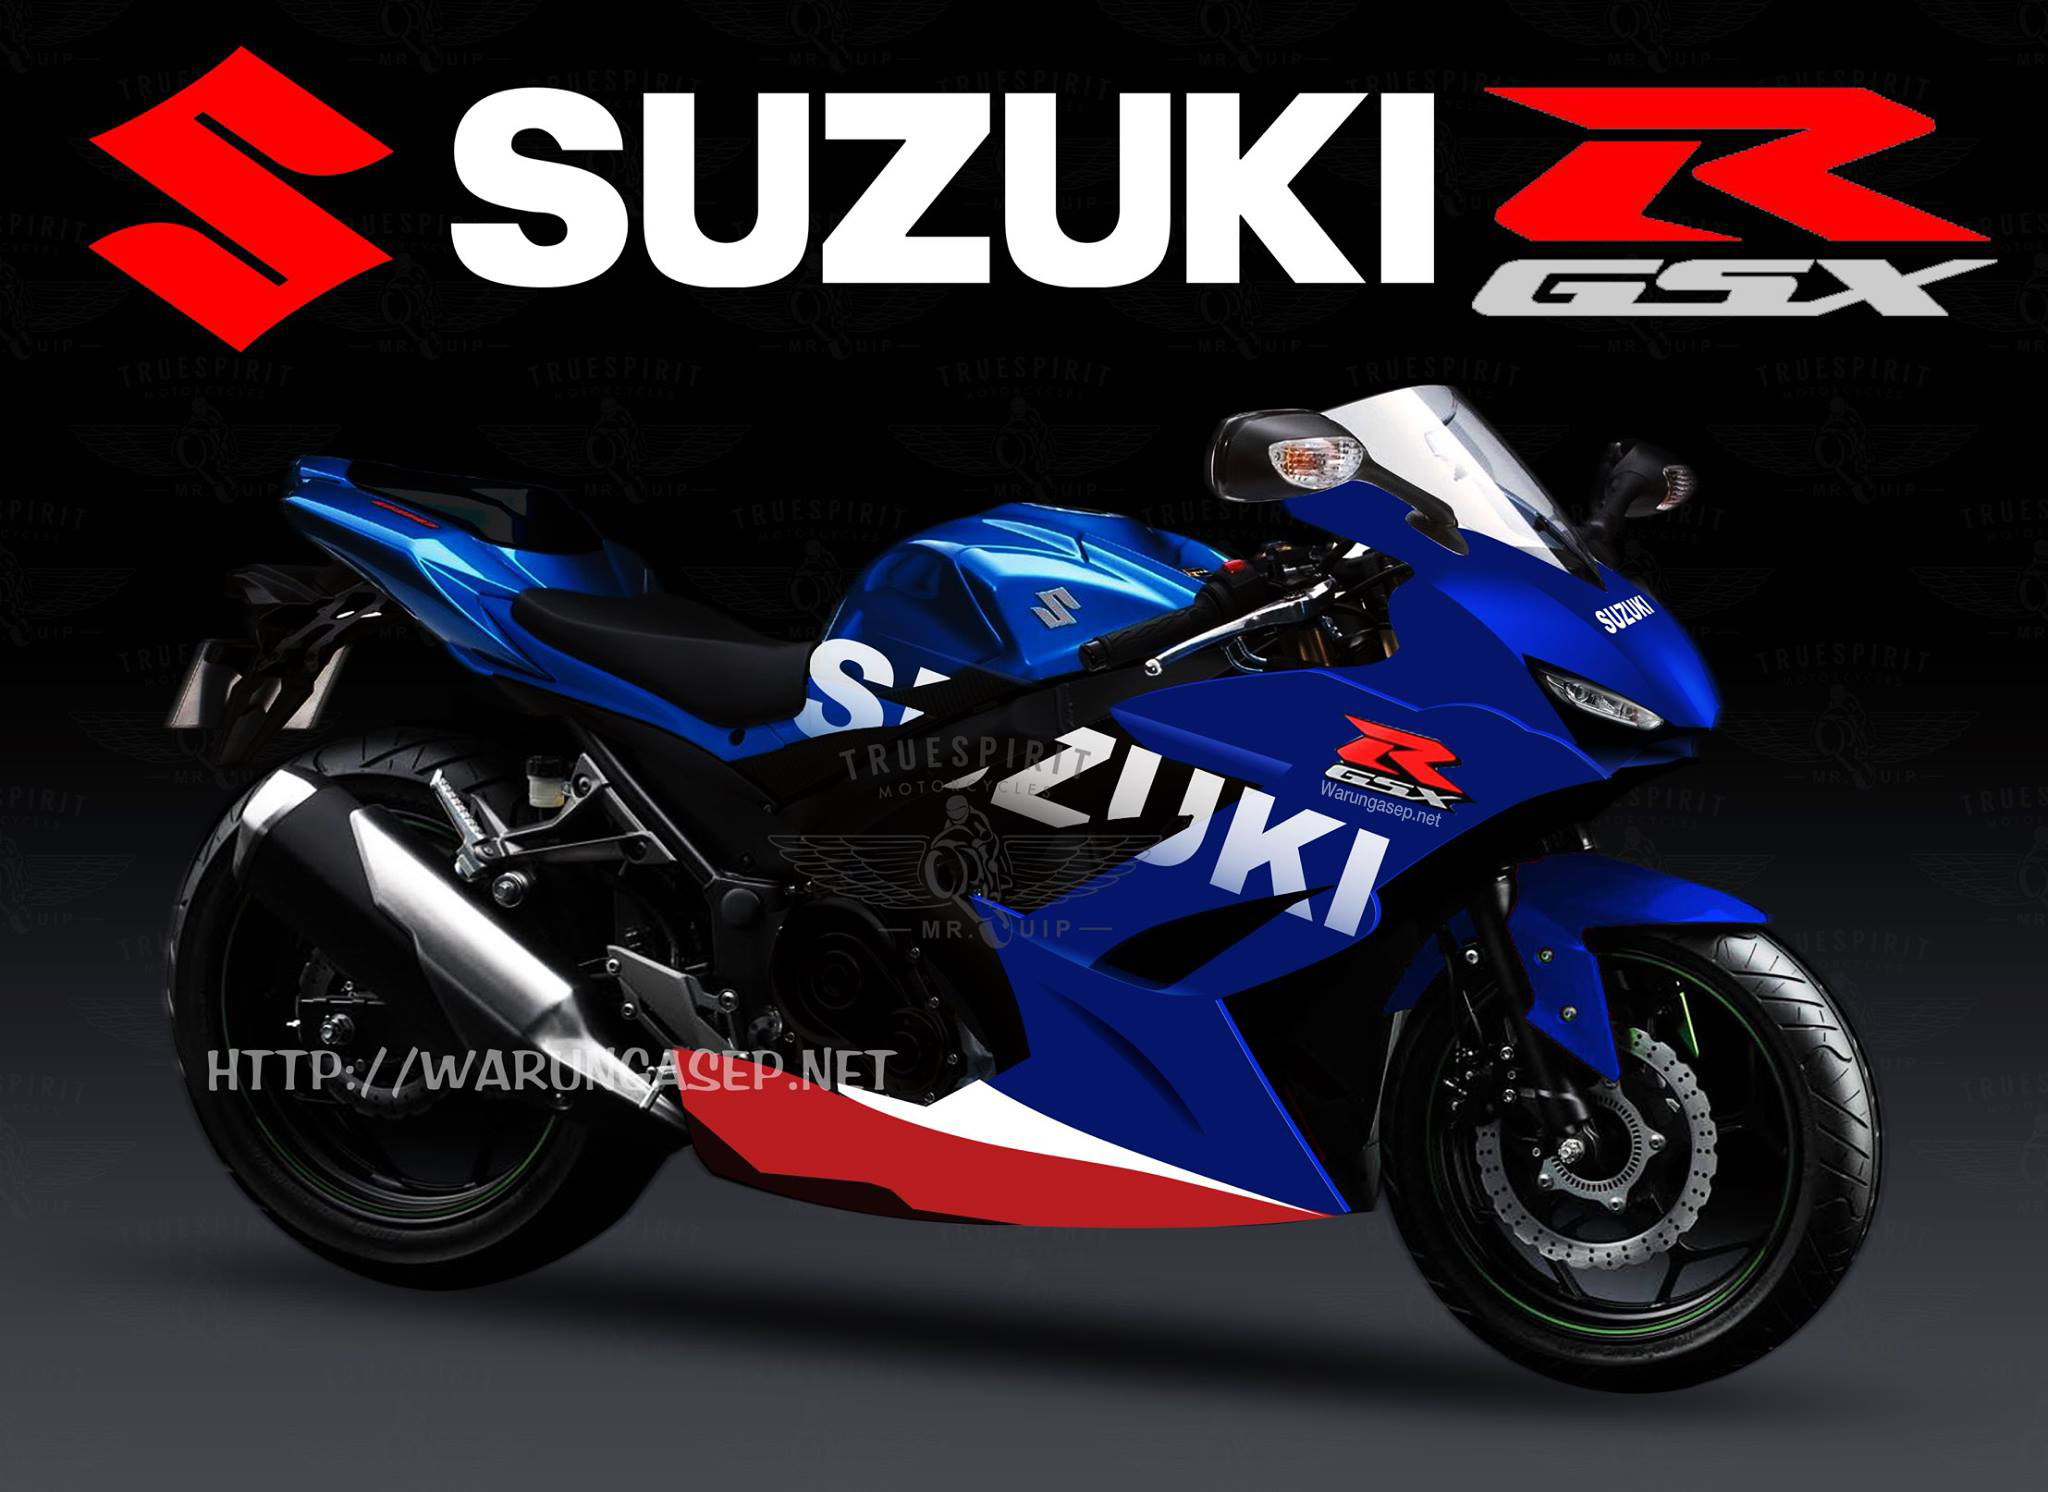 suzuki gixxer fond d'écran,véhicule terrestre,véhicule,moto,superbike racing,voiture